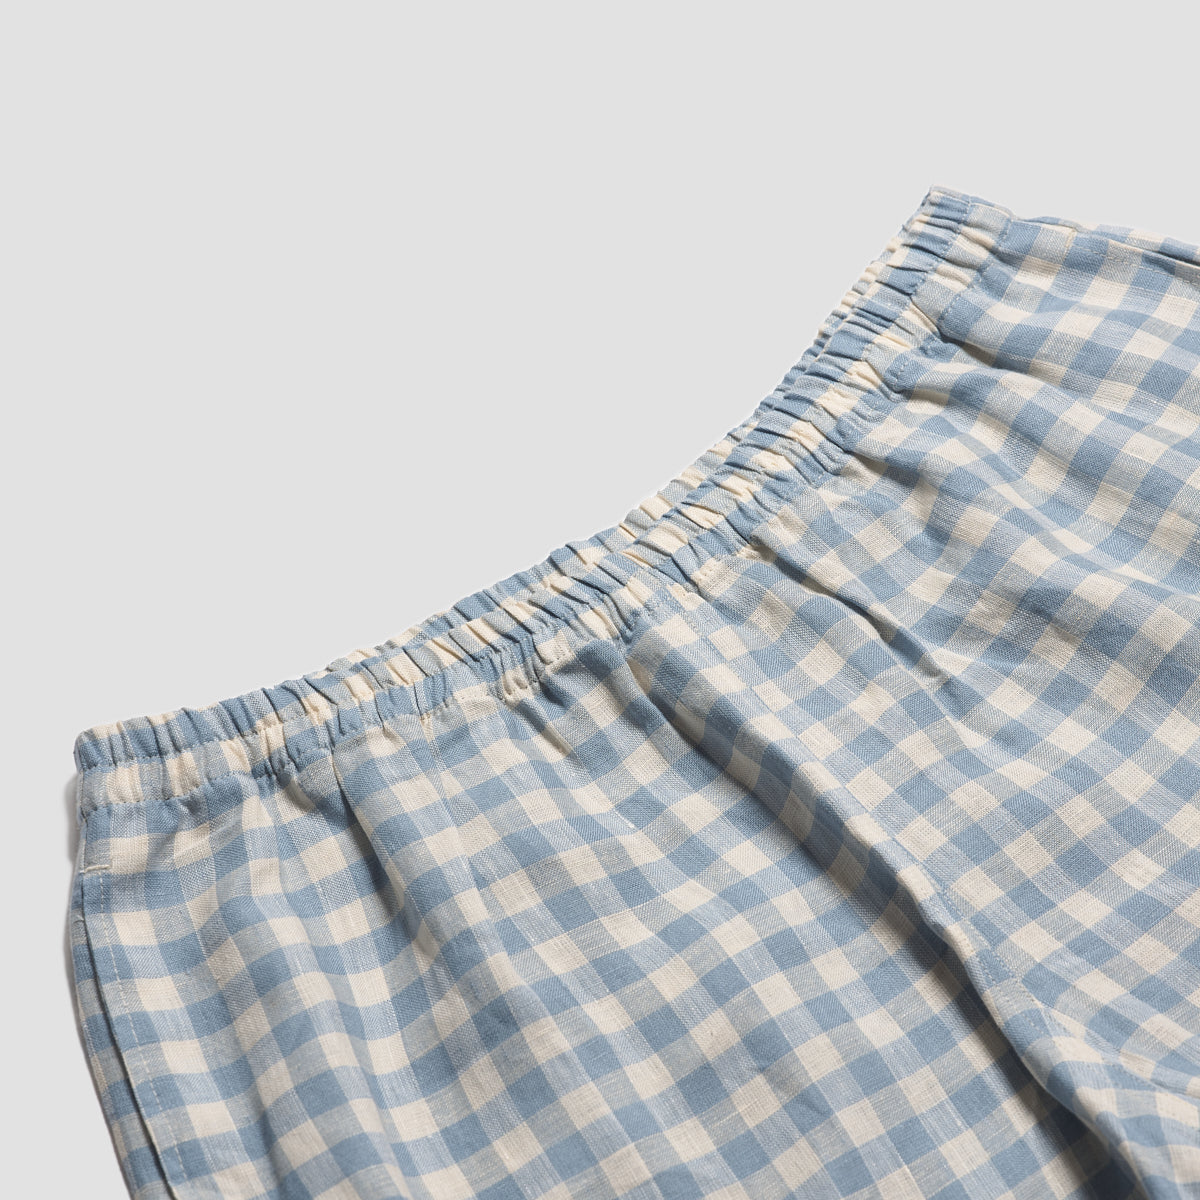 Warm Blue Gingham Linen Pyjama Shorts - Piglet in Bed